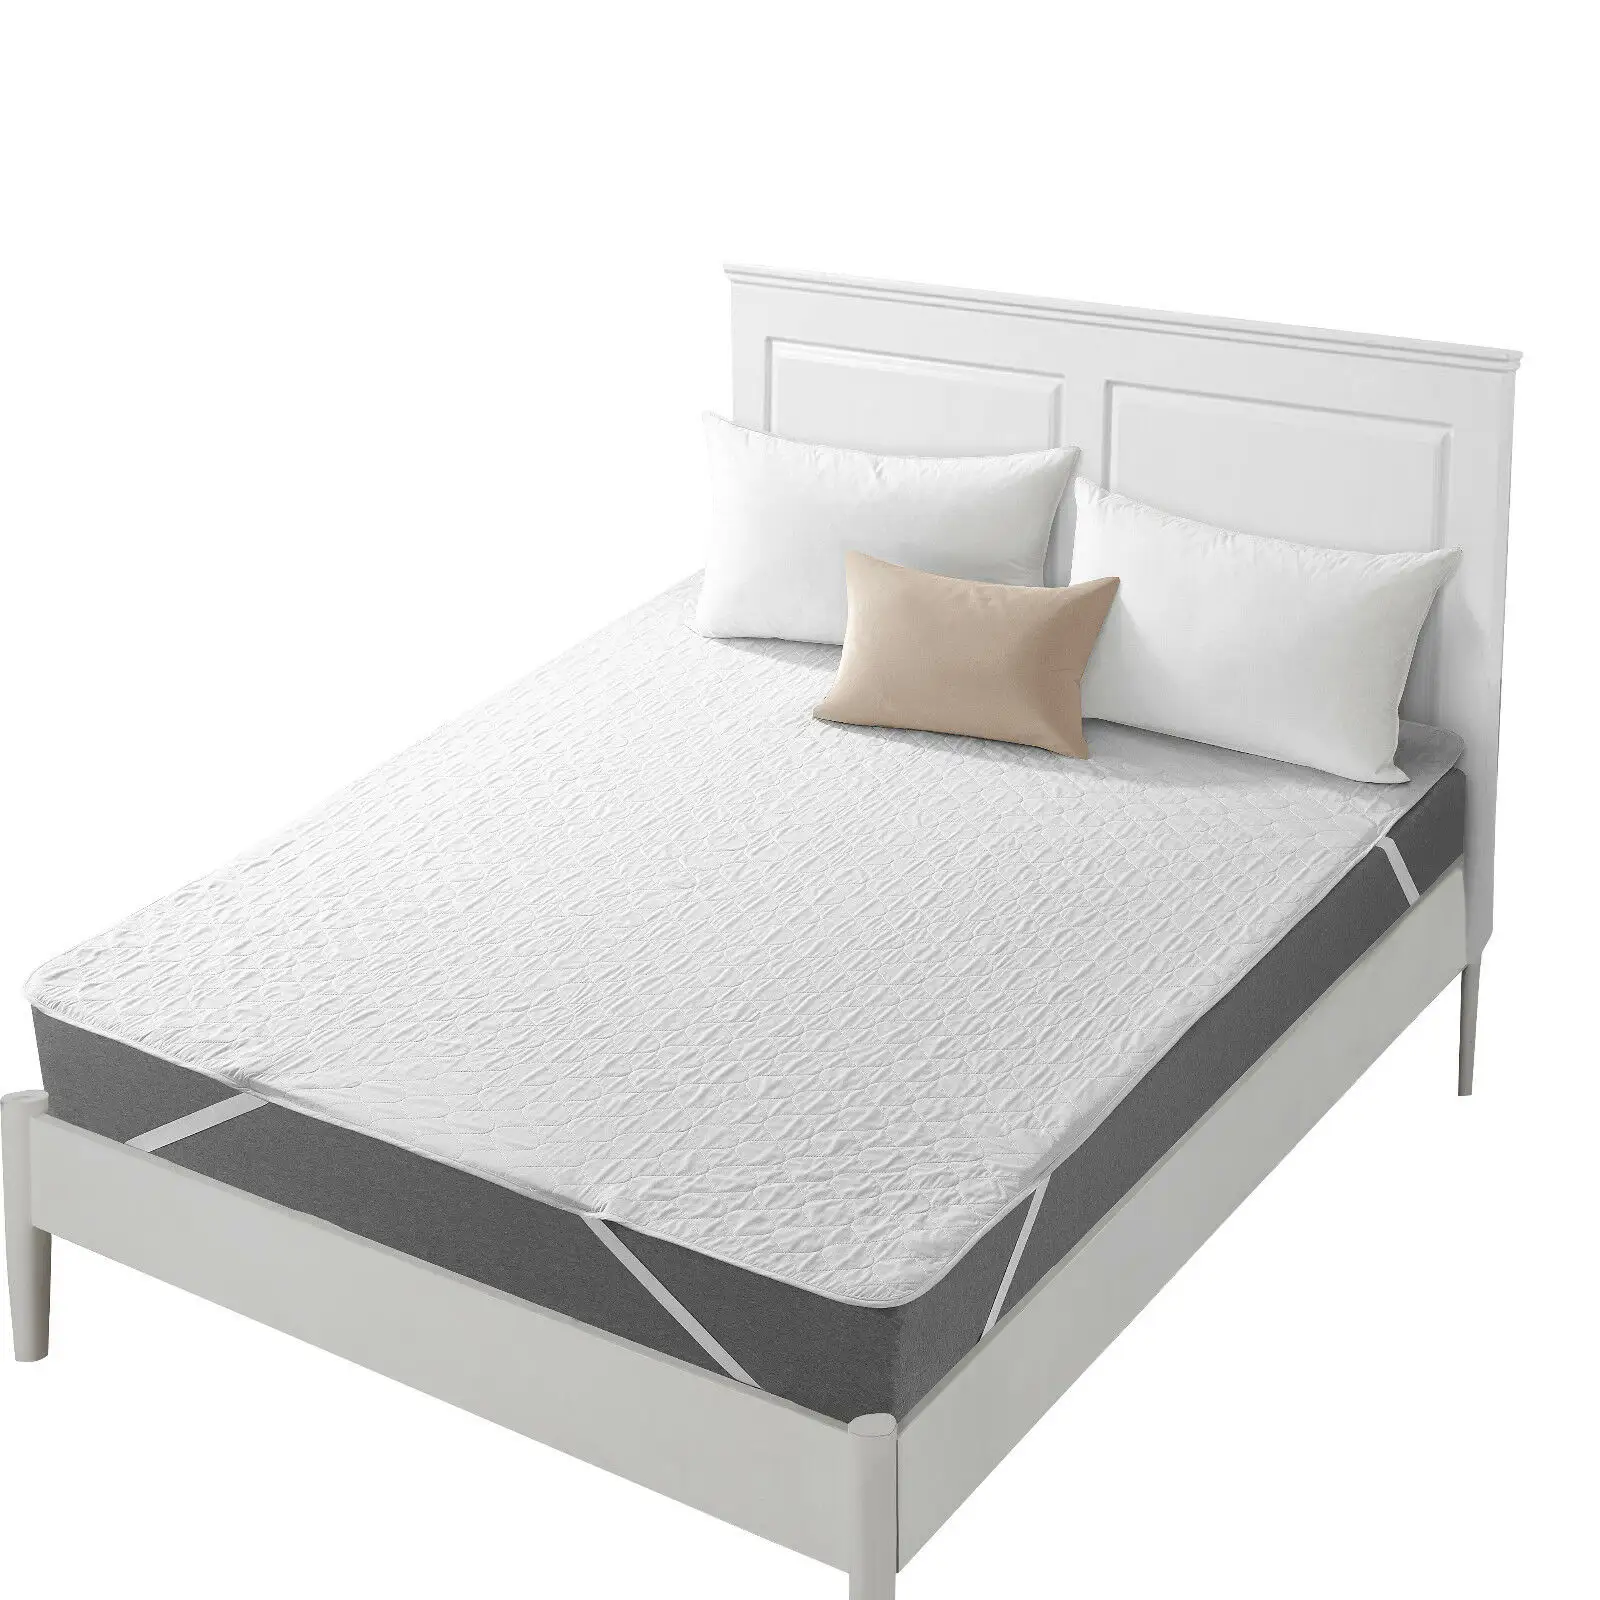 Comfortable Cotton Bamboo Waterproof Memory Foam Bed Mattress Topper